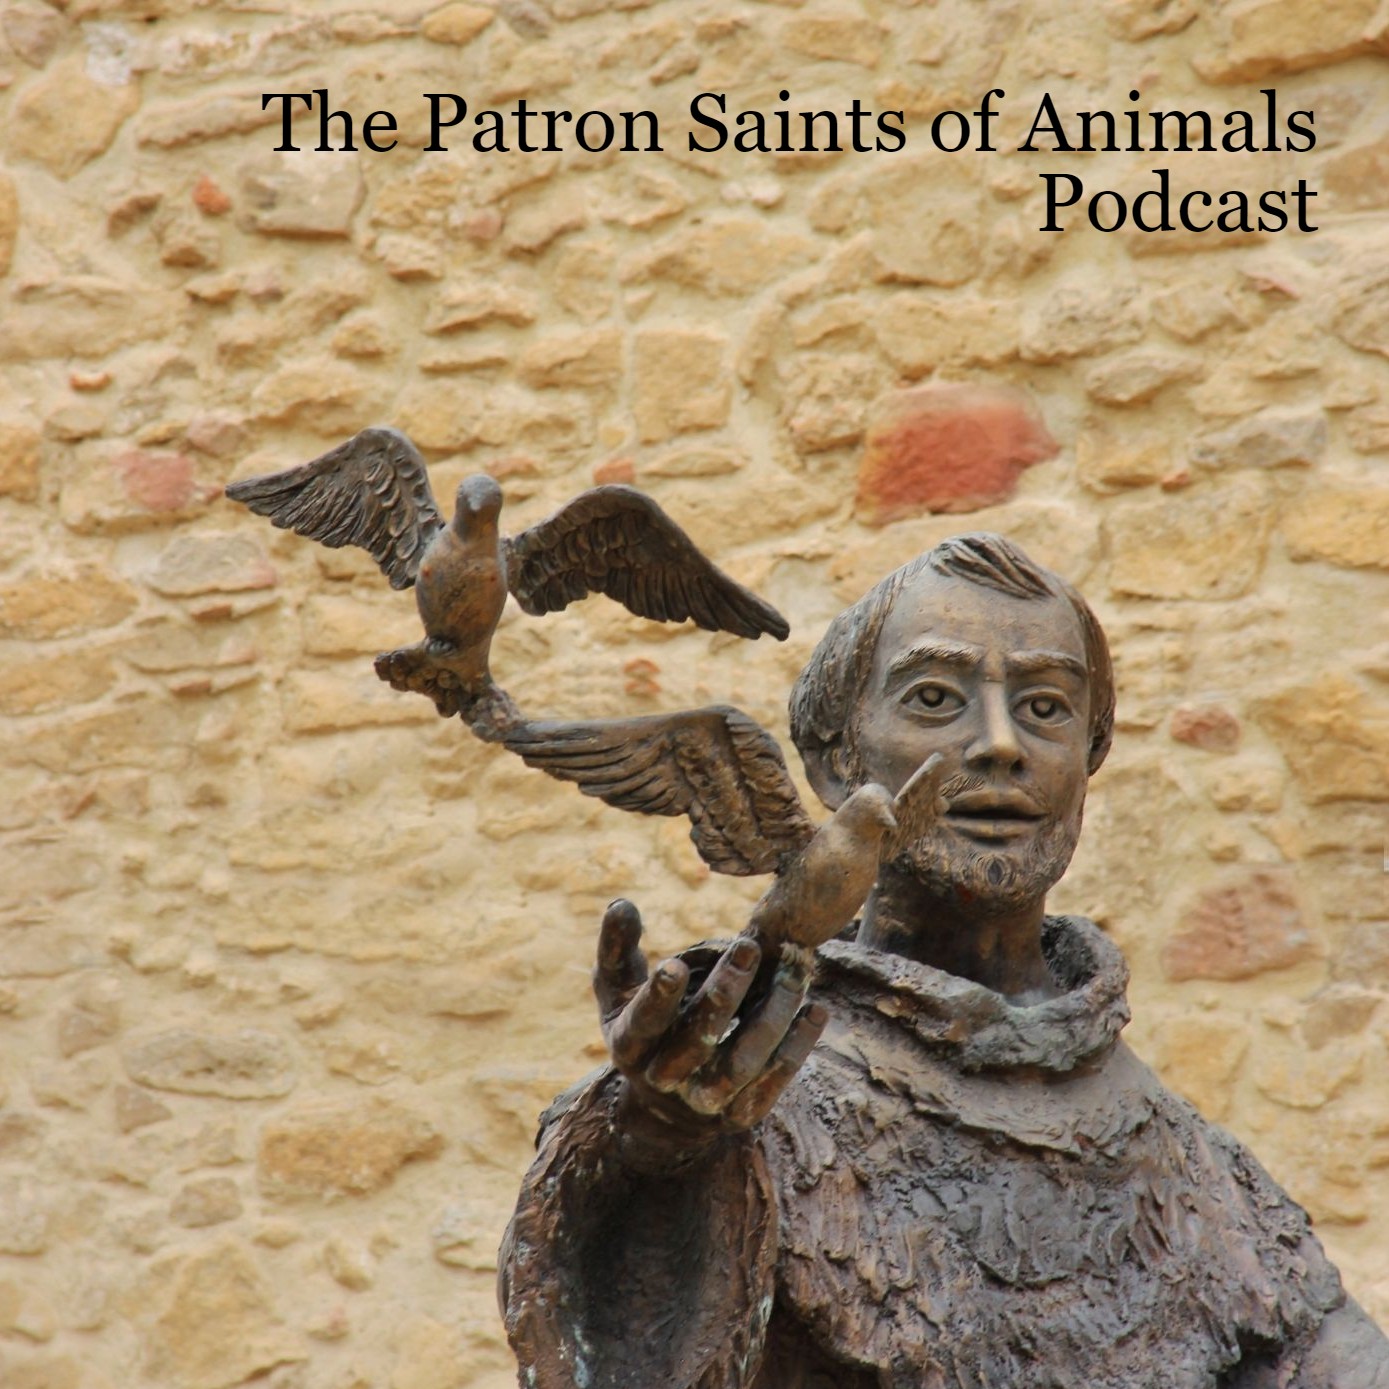 The Patron Saints of Animals